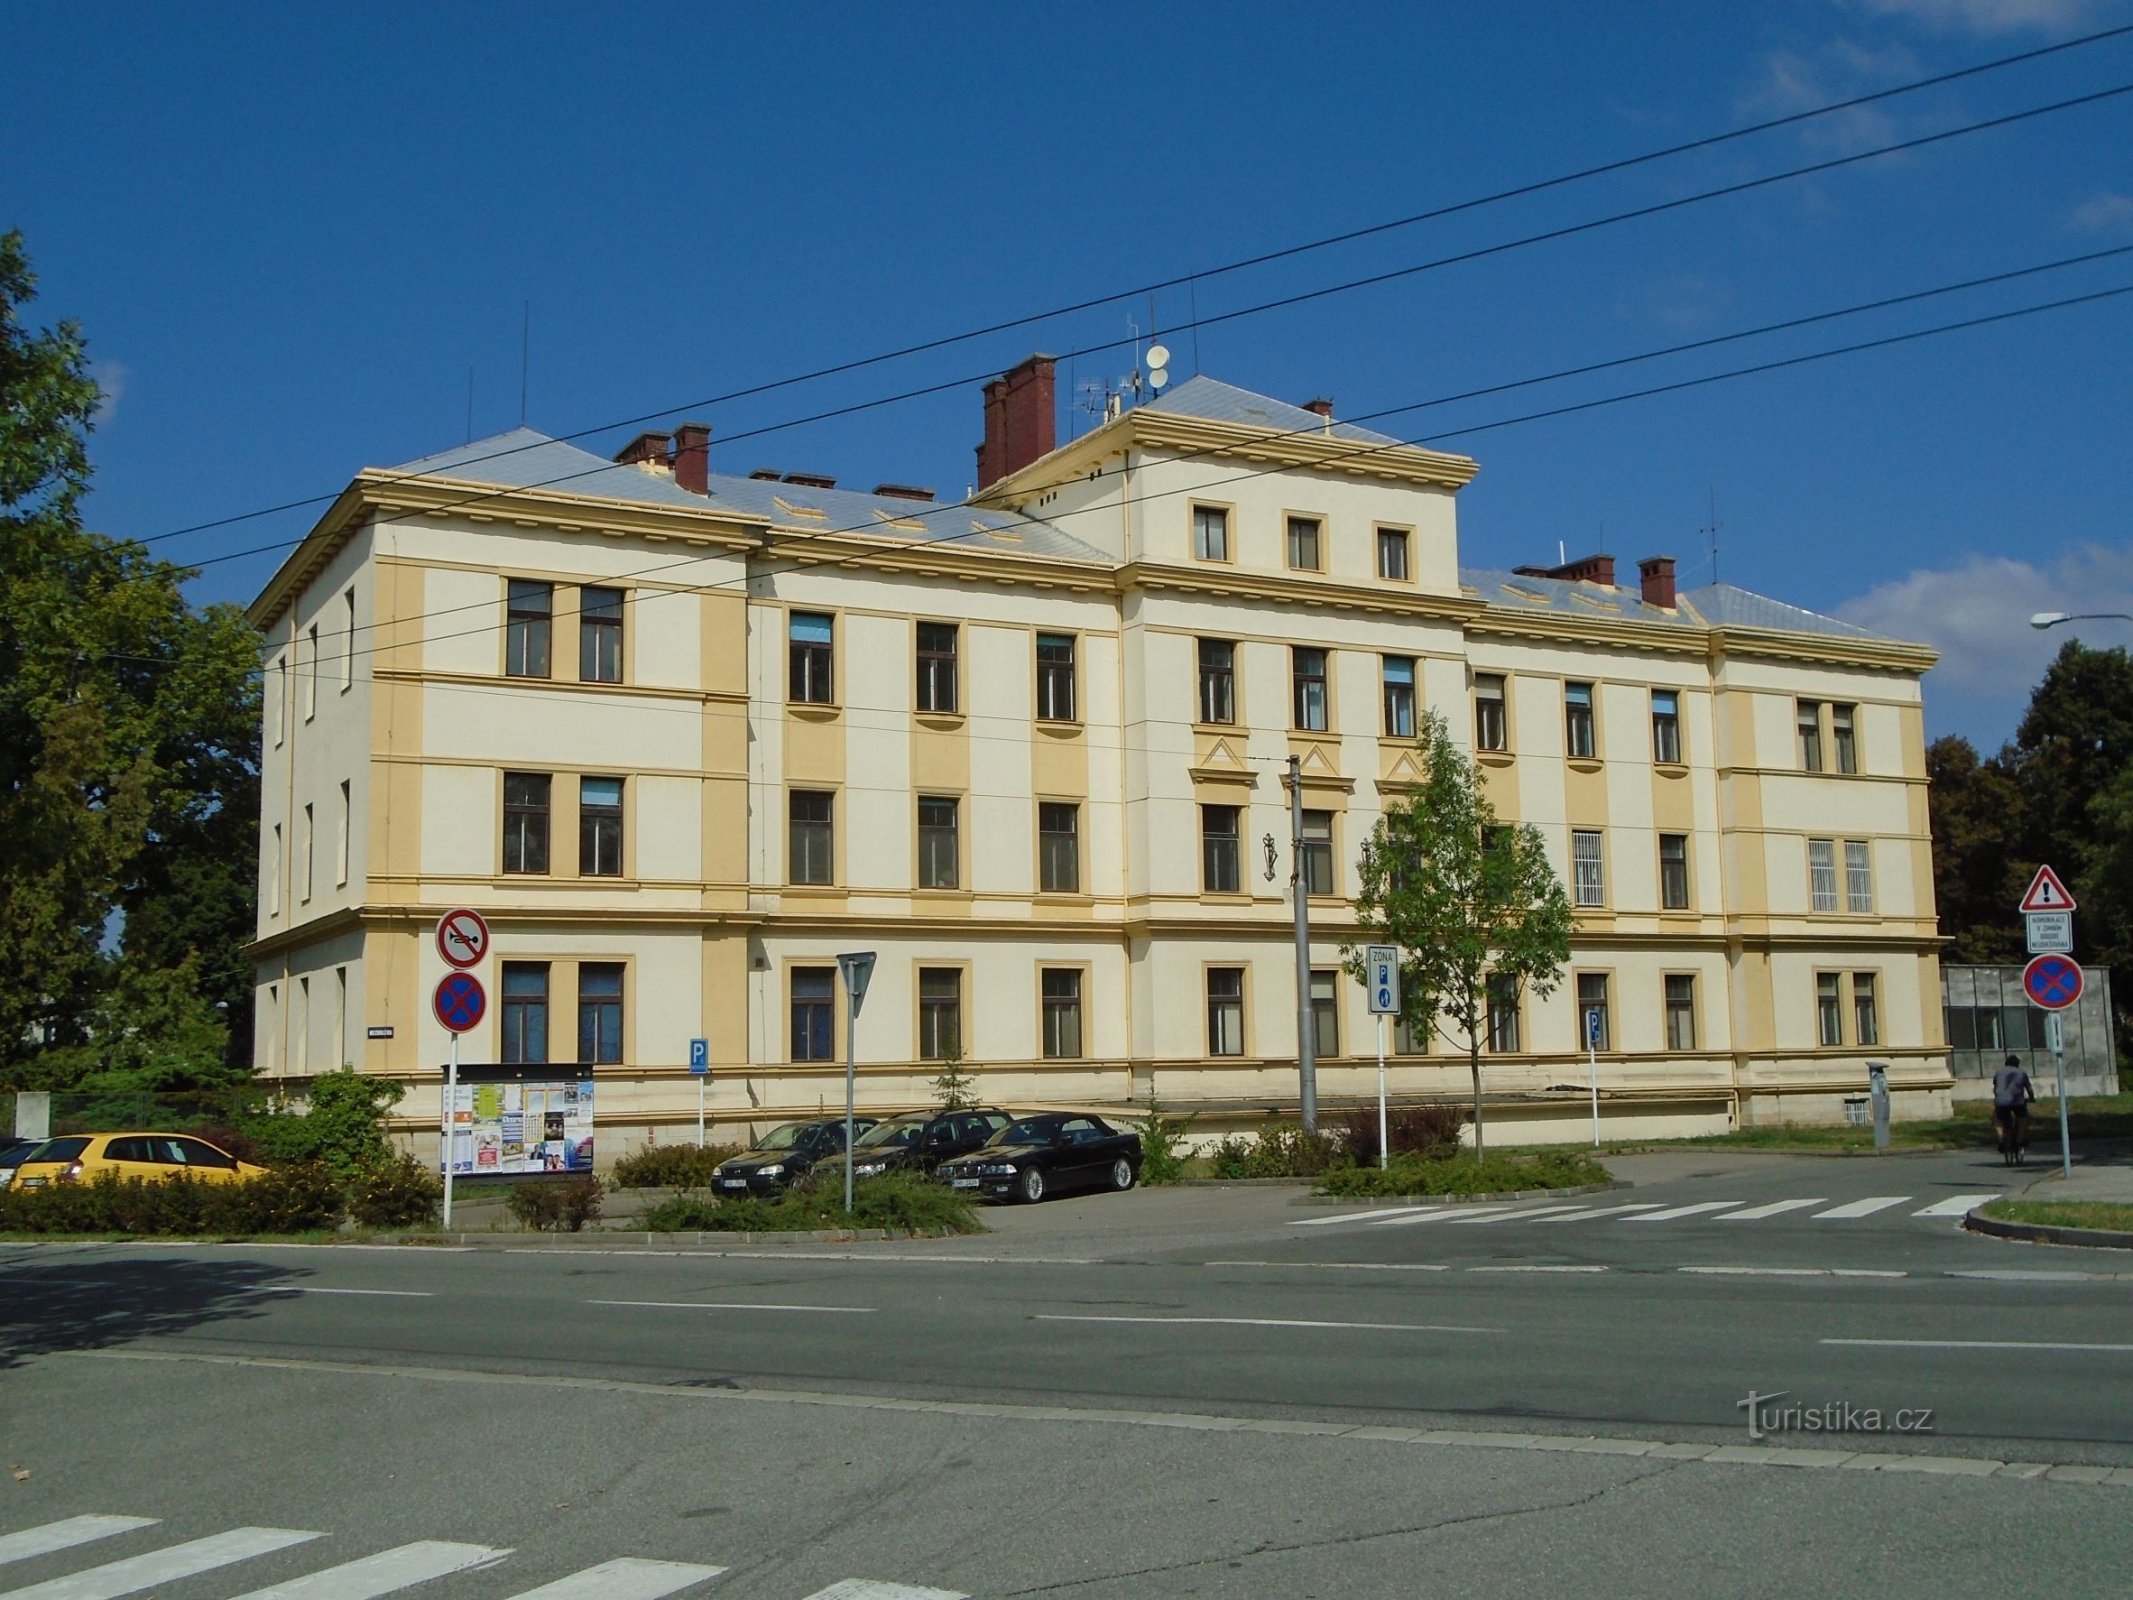 Old Hospital (Hradec Králové, 2.9.2018. april XNUMX)